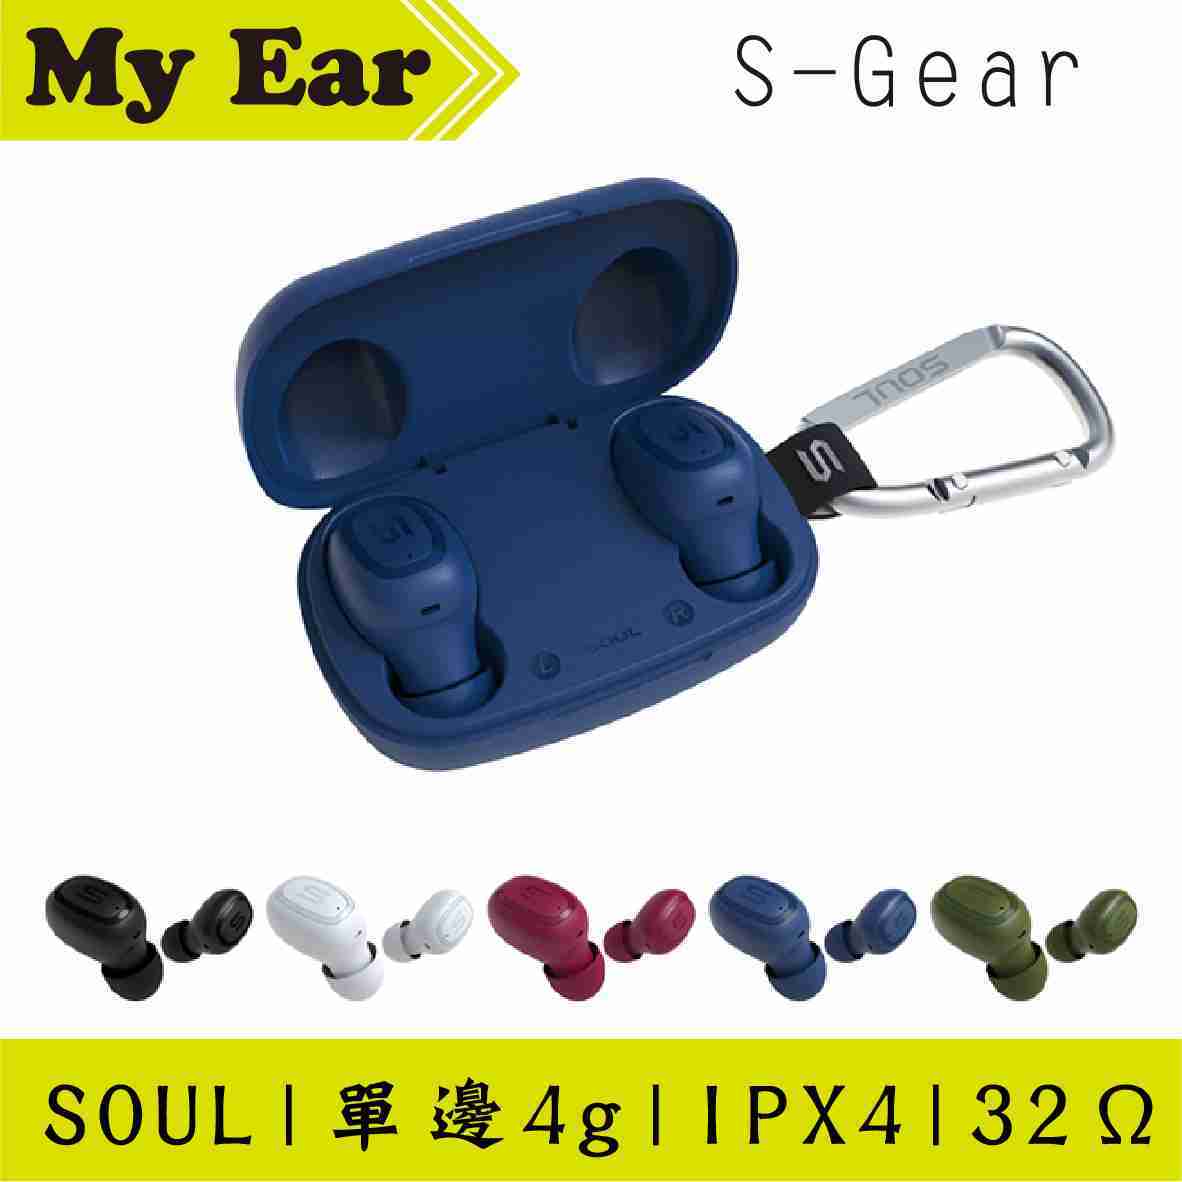 SOUL S-Gear 白色 單邊4g 附登山扣 防水 真無線 藍芽耳機 | My Ear 耳機專門店